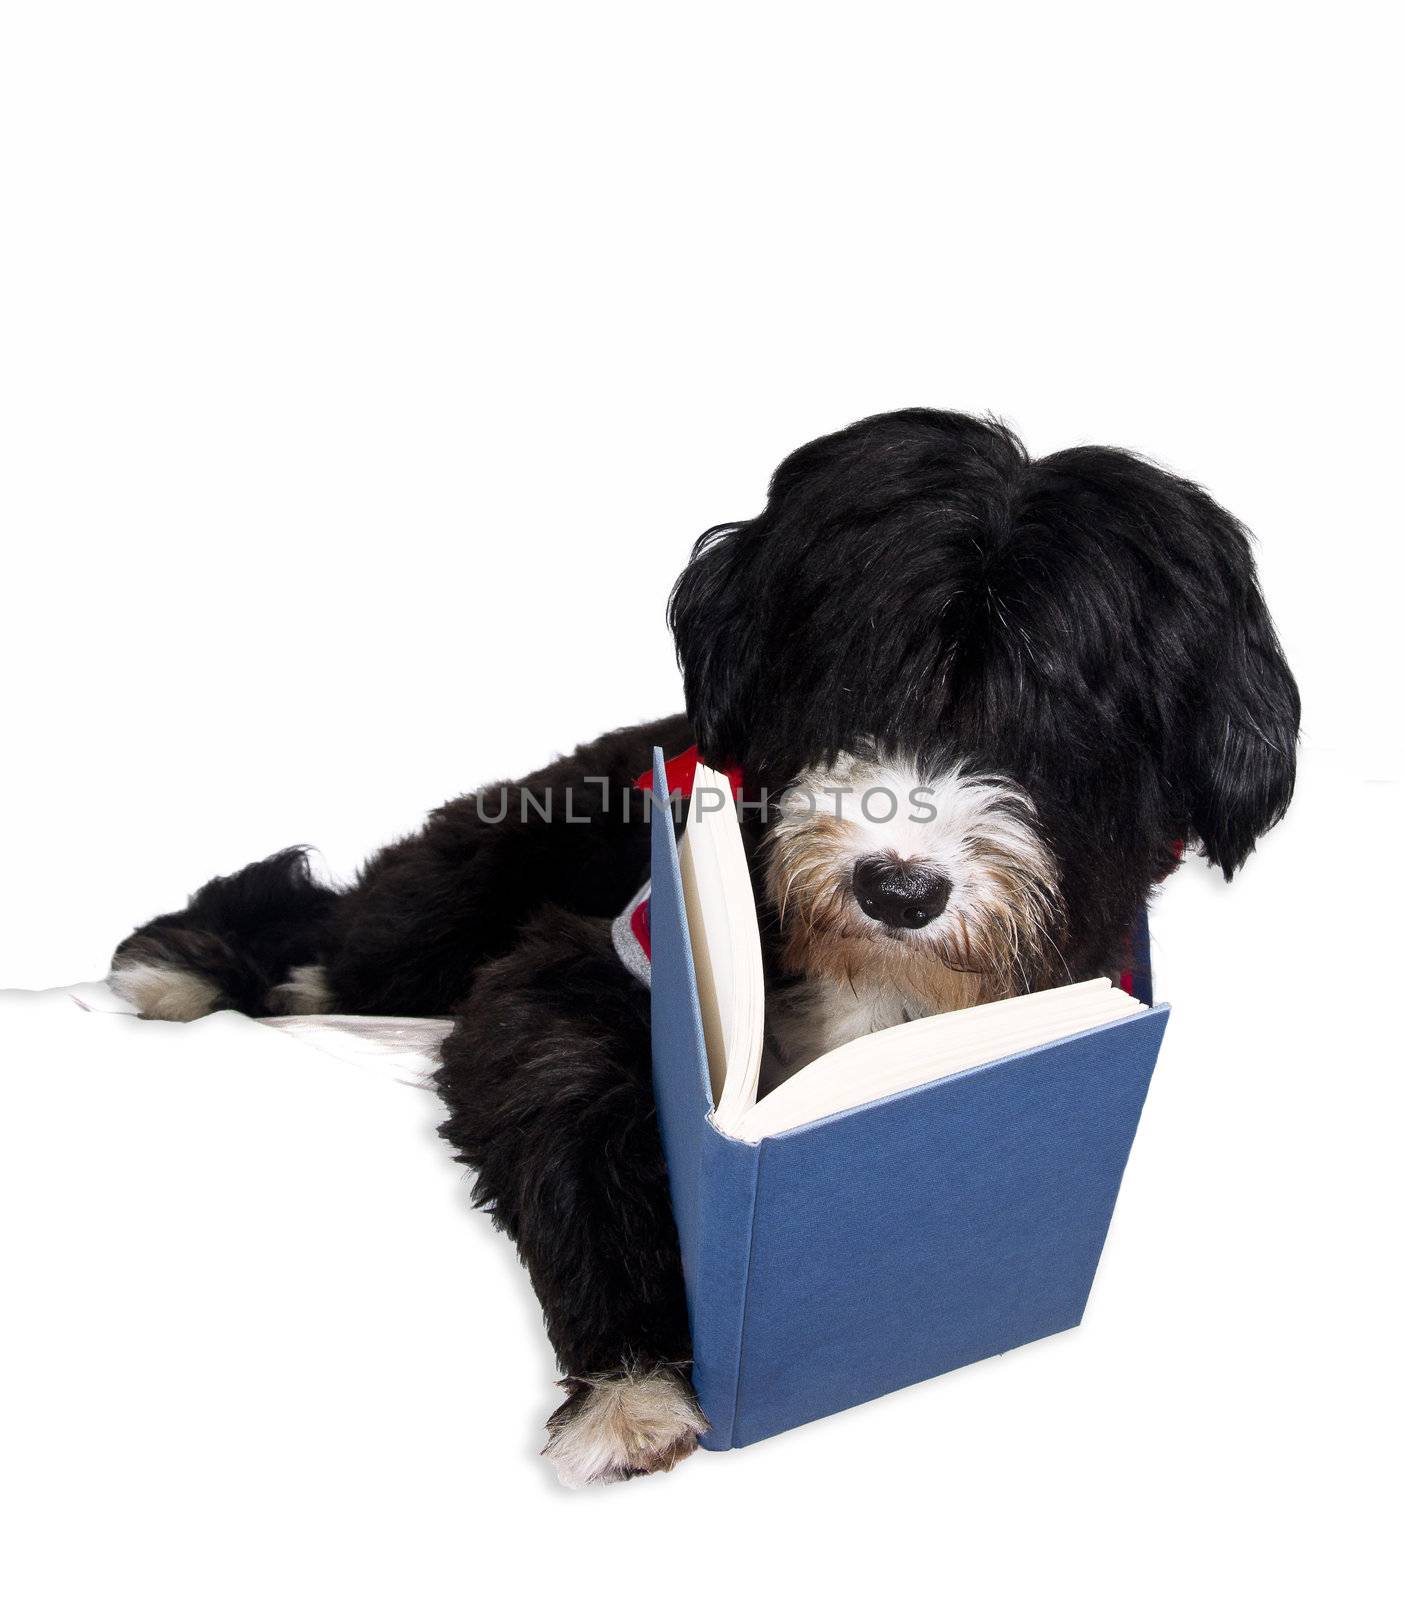 a cute black dog reading a book